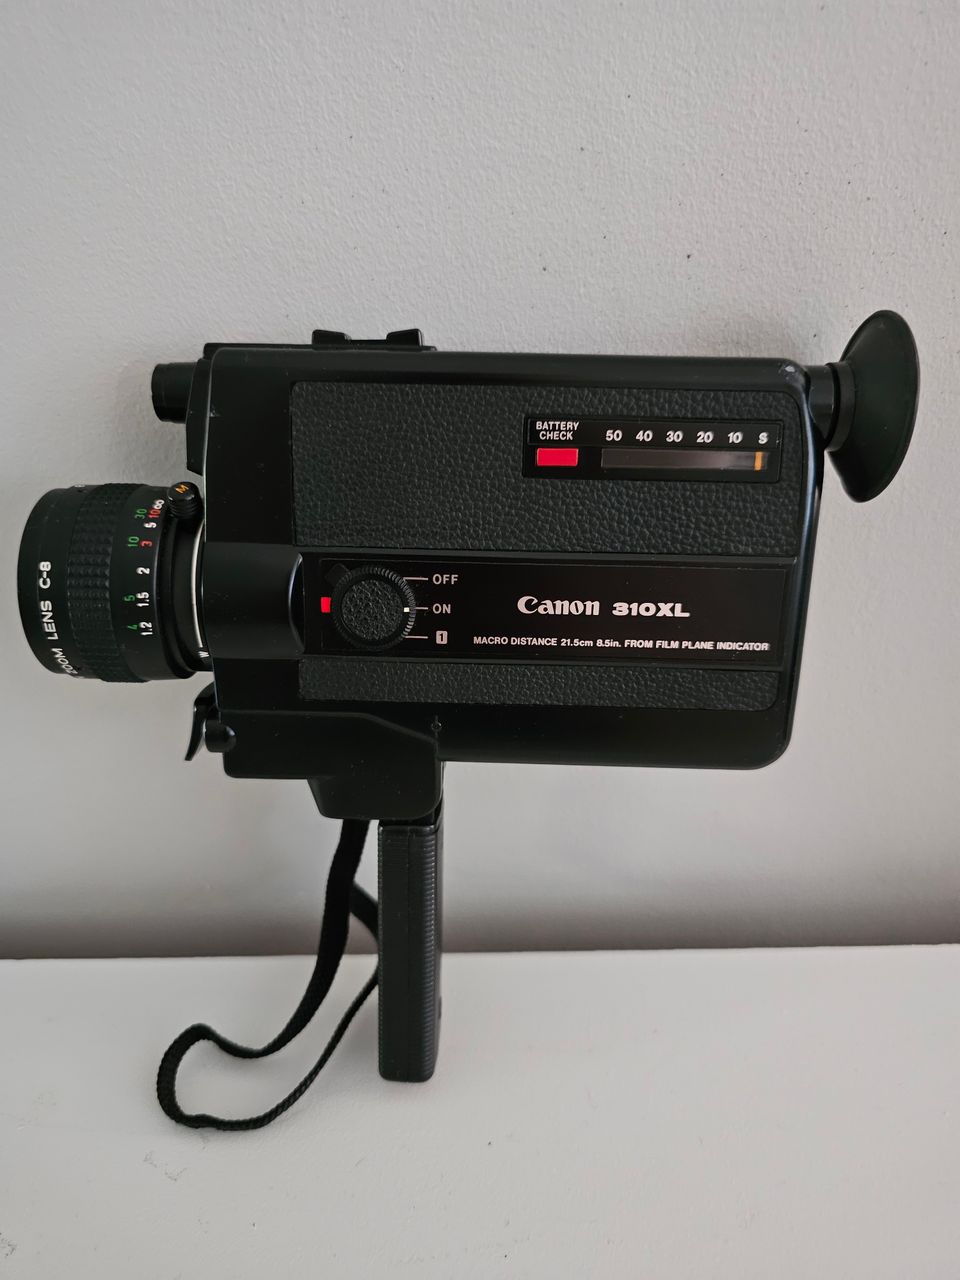 Canon 310XL kaitafilmi kamera